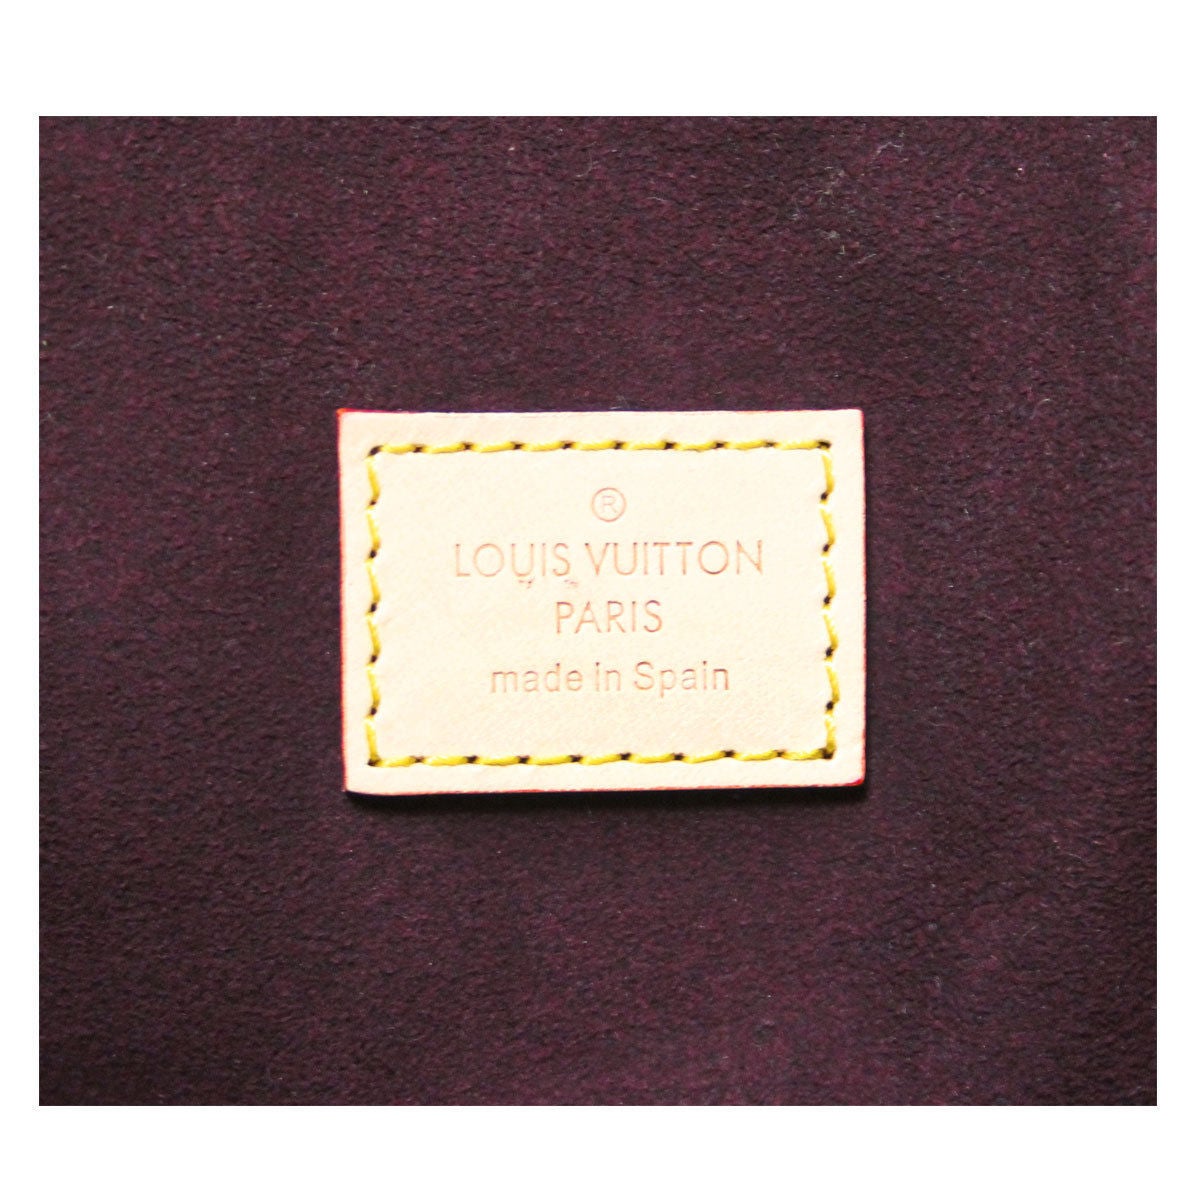 Louis Vuitton Tuileries Monogram Canvas Handbag Tote Purse New in Box 2